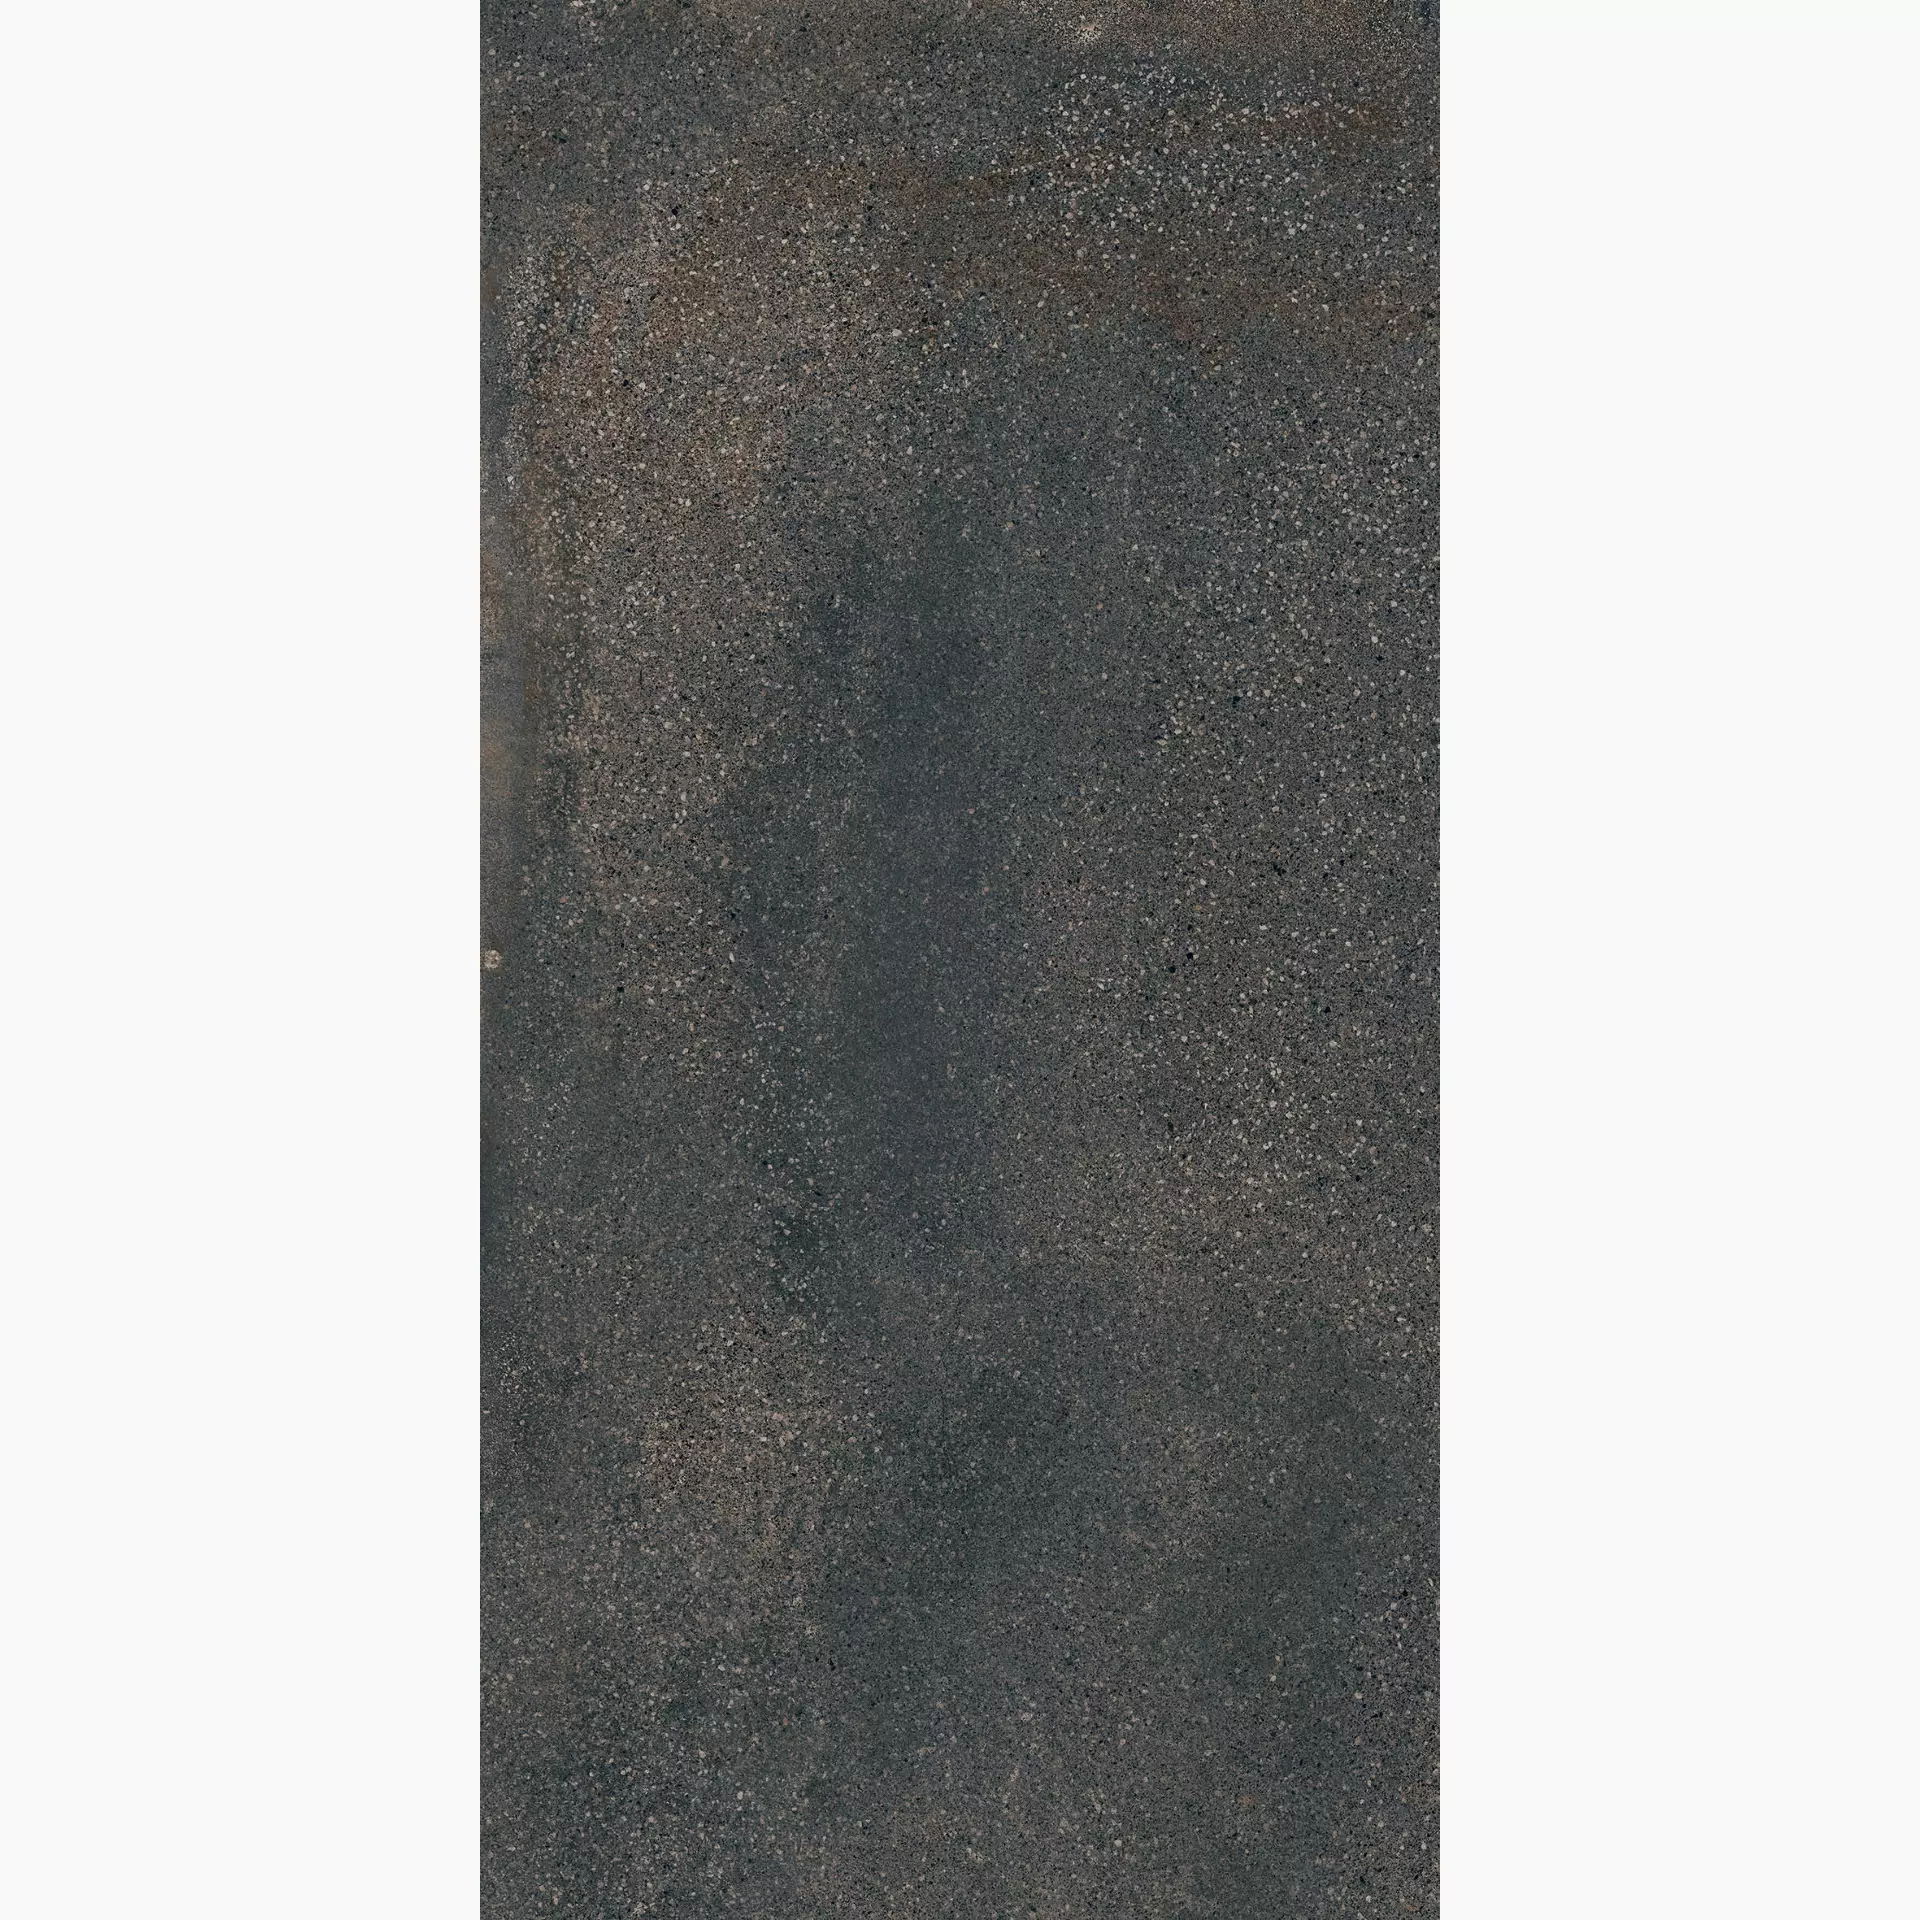 ABK Blend Concrete Iron Naturale PF60008260 30x60cm rectified 8,5mm